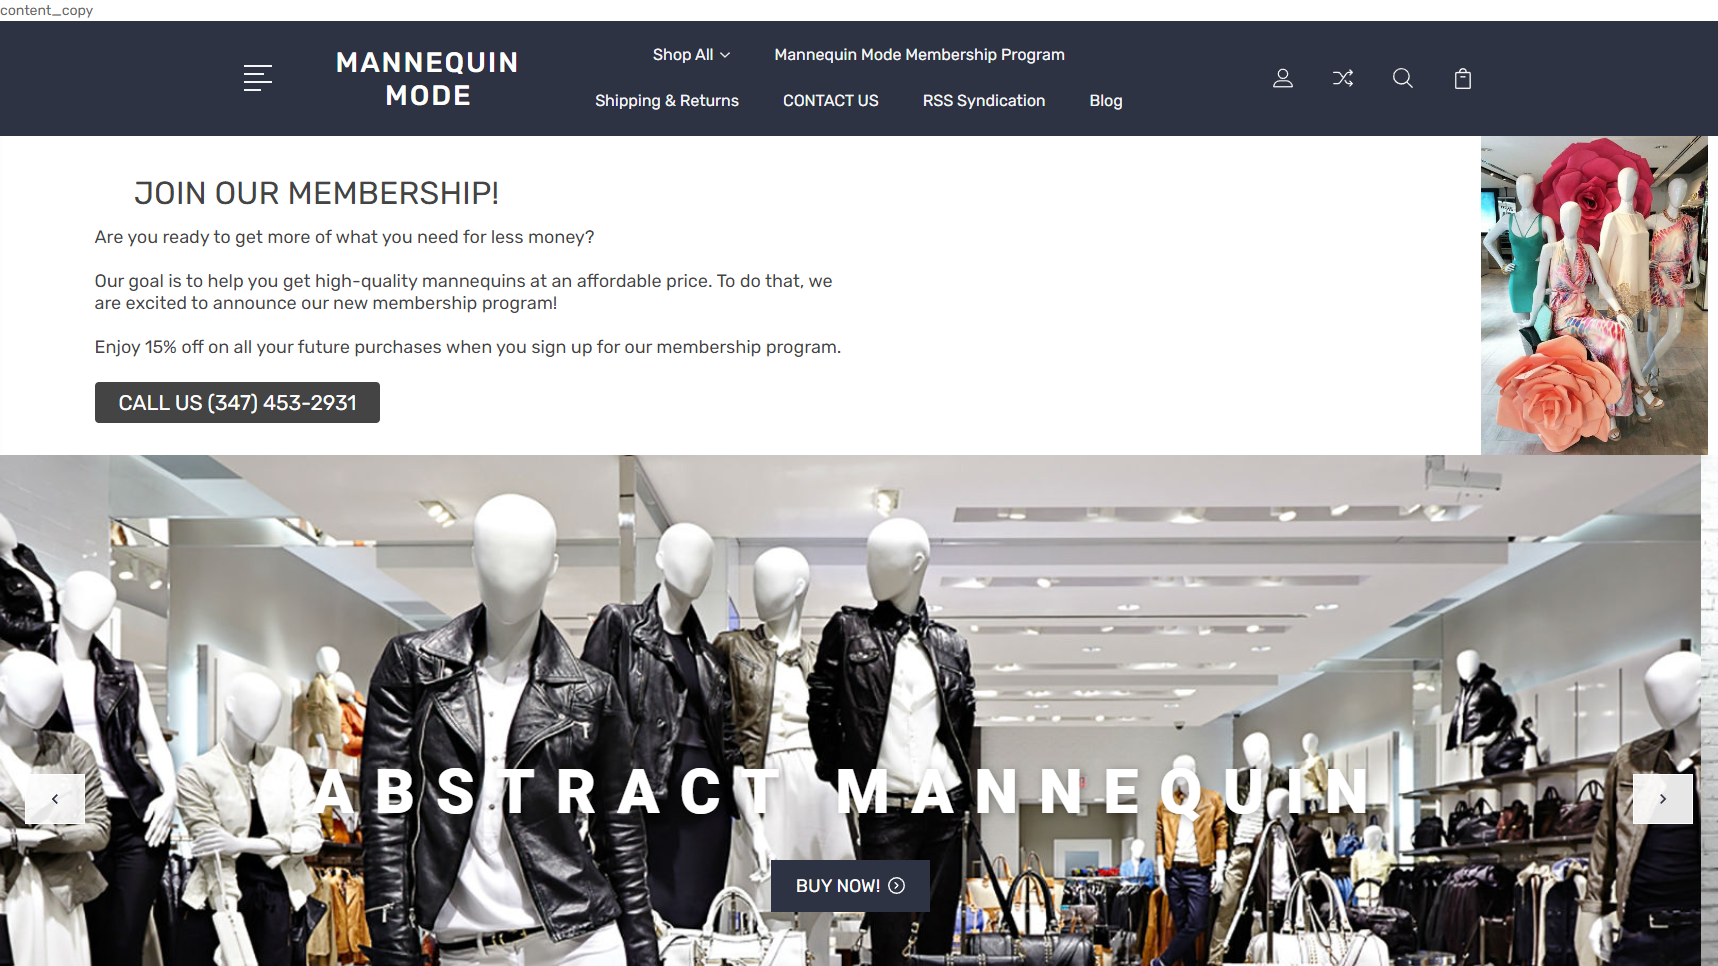 Mannequin Mode - Department Store Mannequin Manufacturer